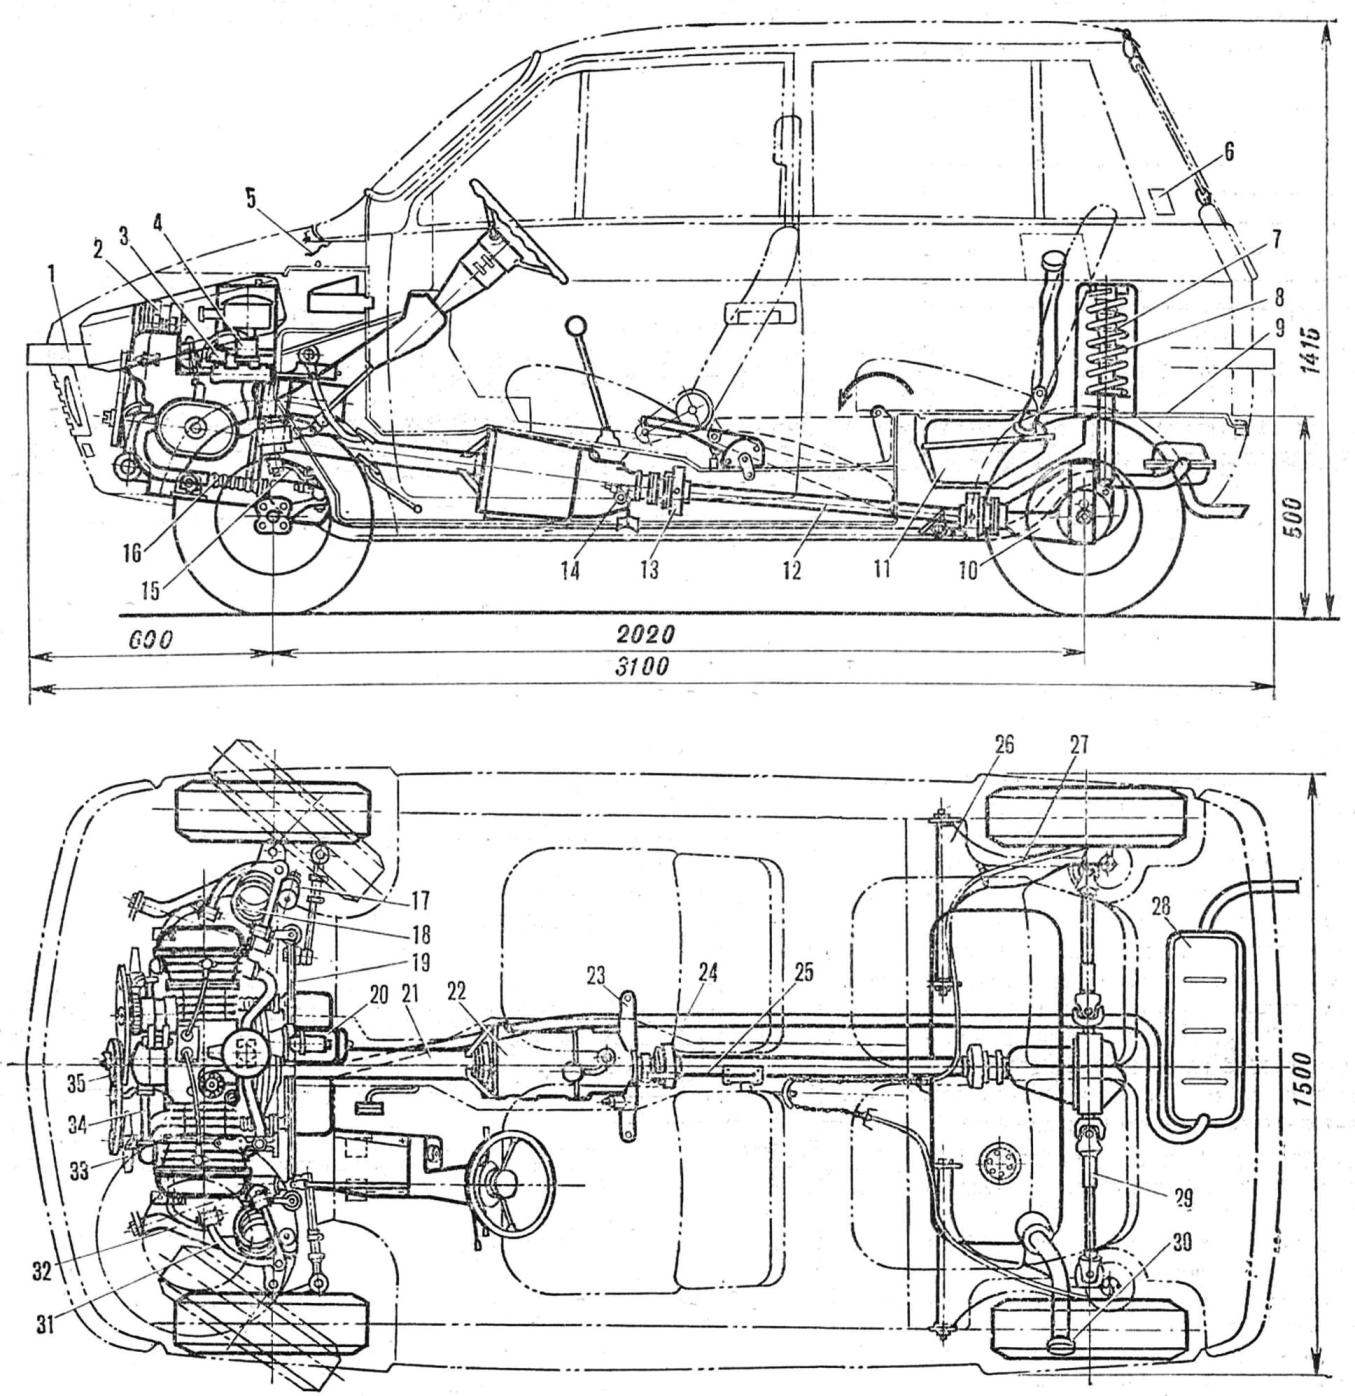 Fig. 1. Device city car Kolobok